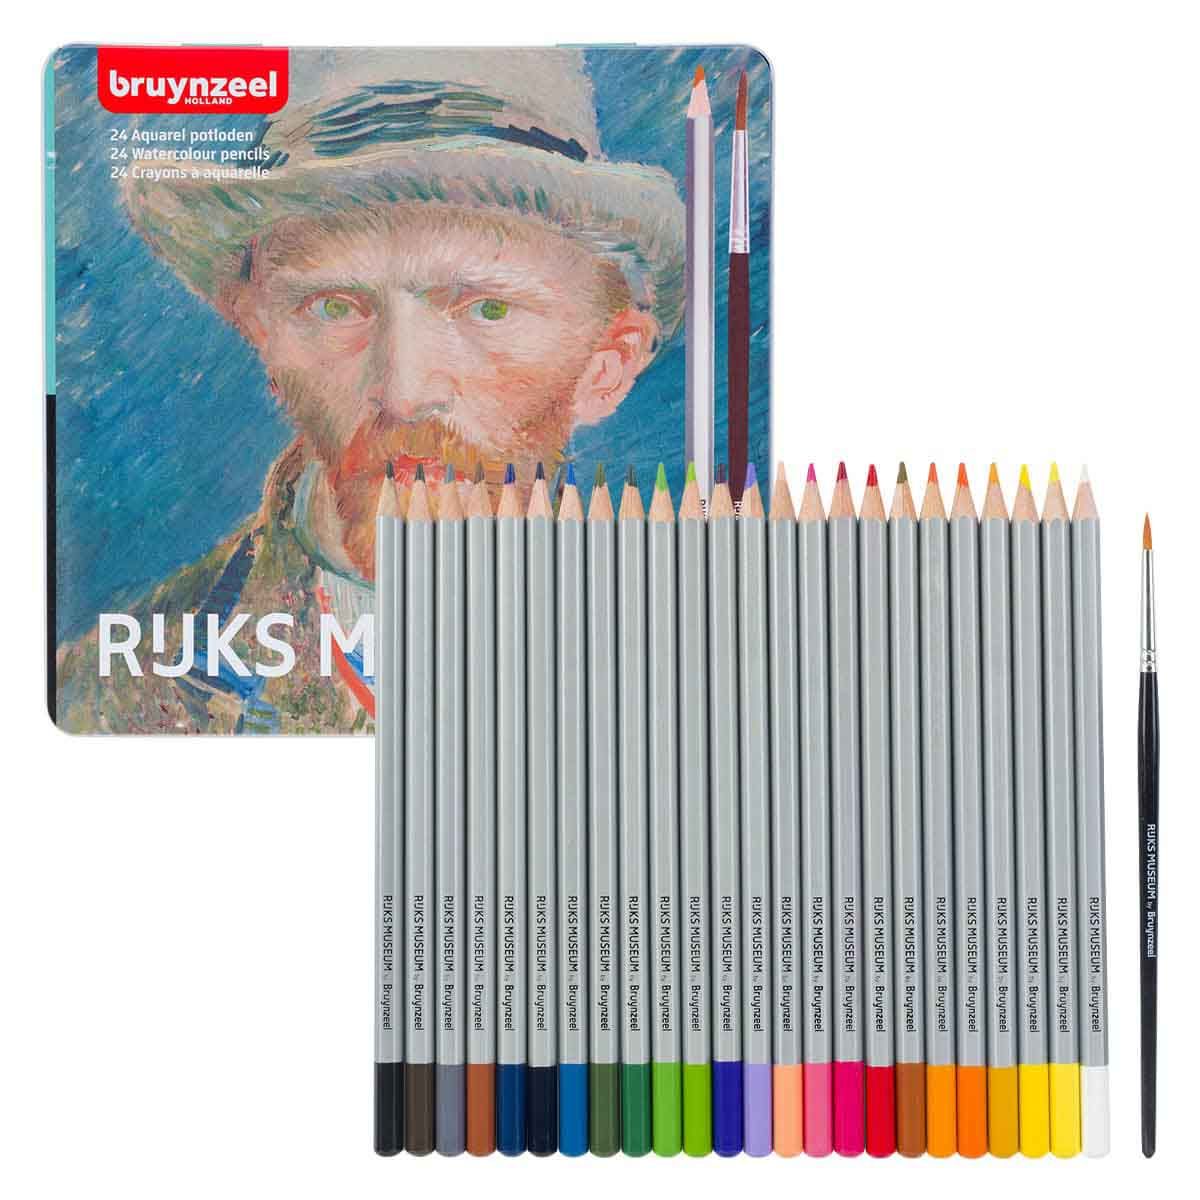 Bruynzeel Rijksmuseum Dutch Masters Pencil - Van Gogh Portrait (Set of 24)